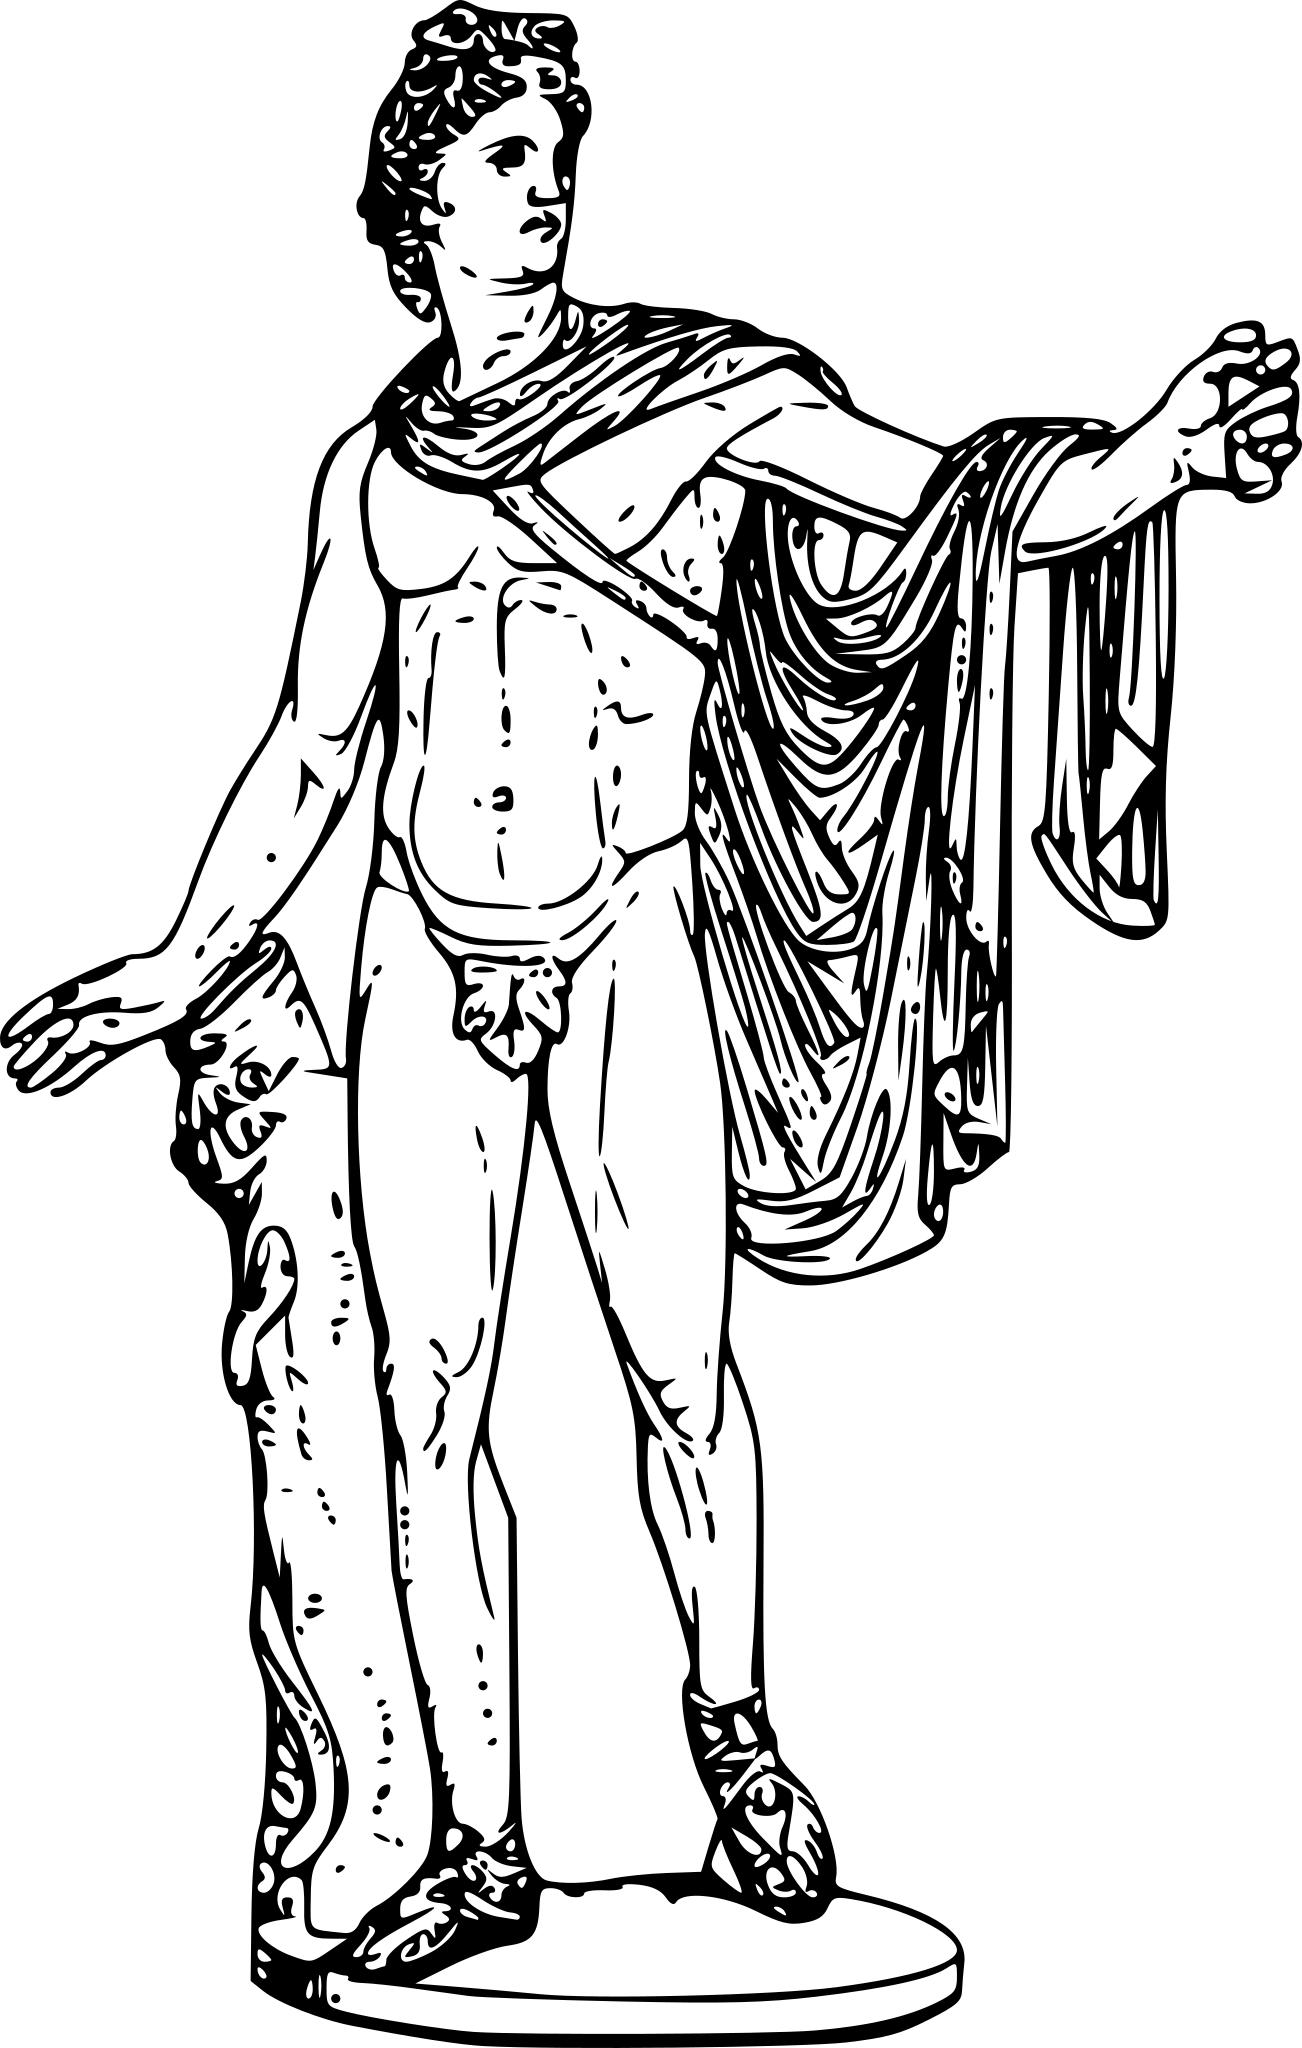 Аполлон статуя древняя Греция